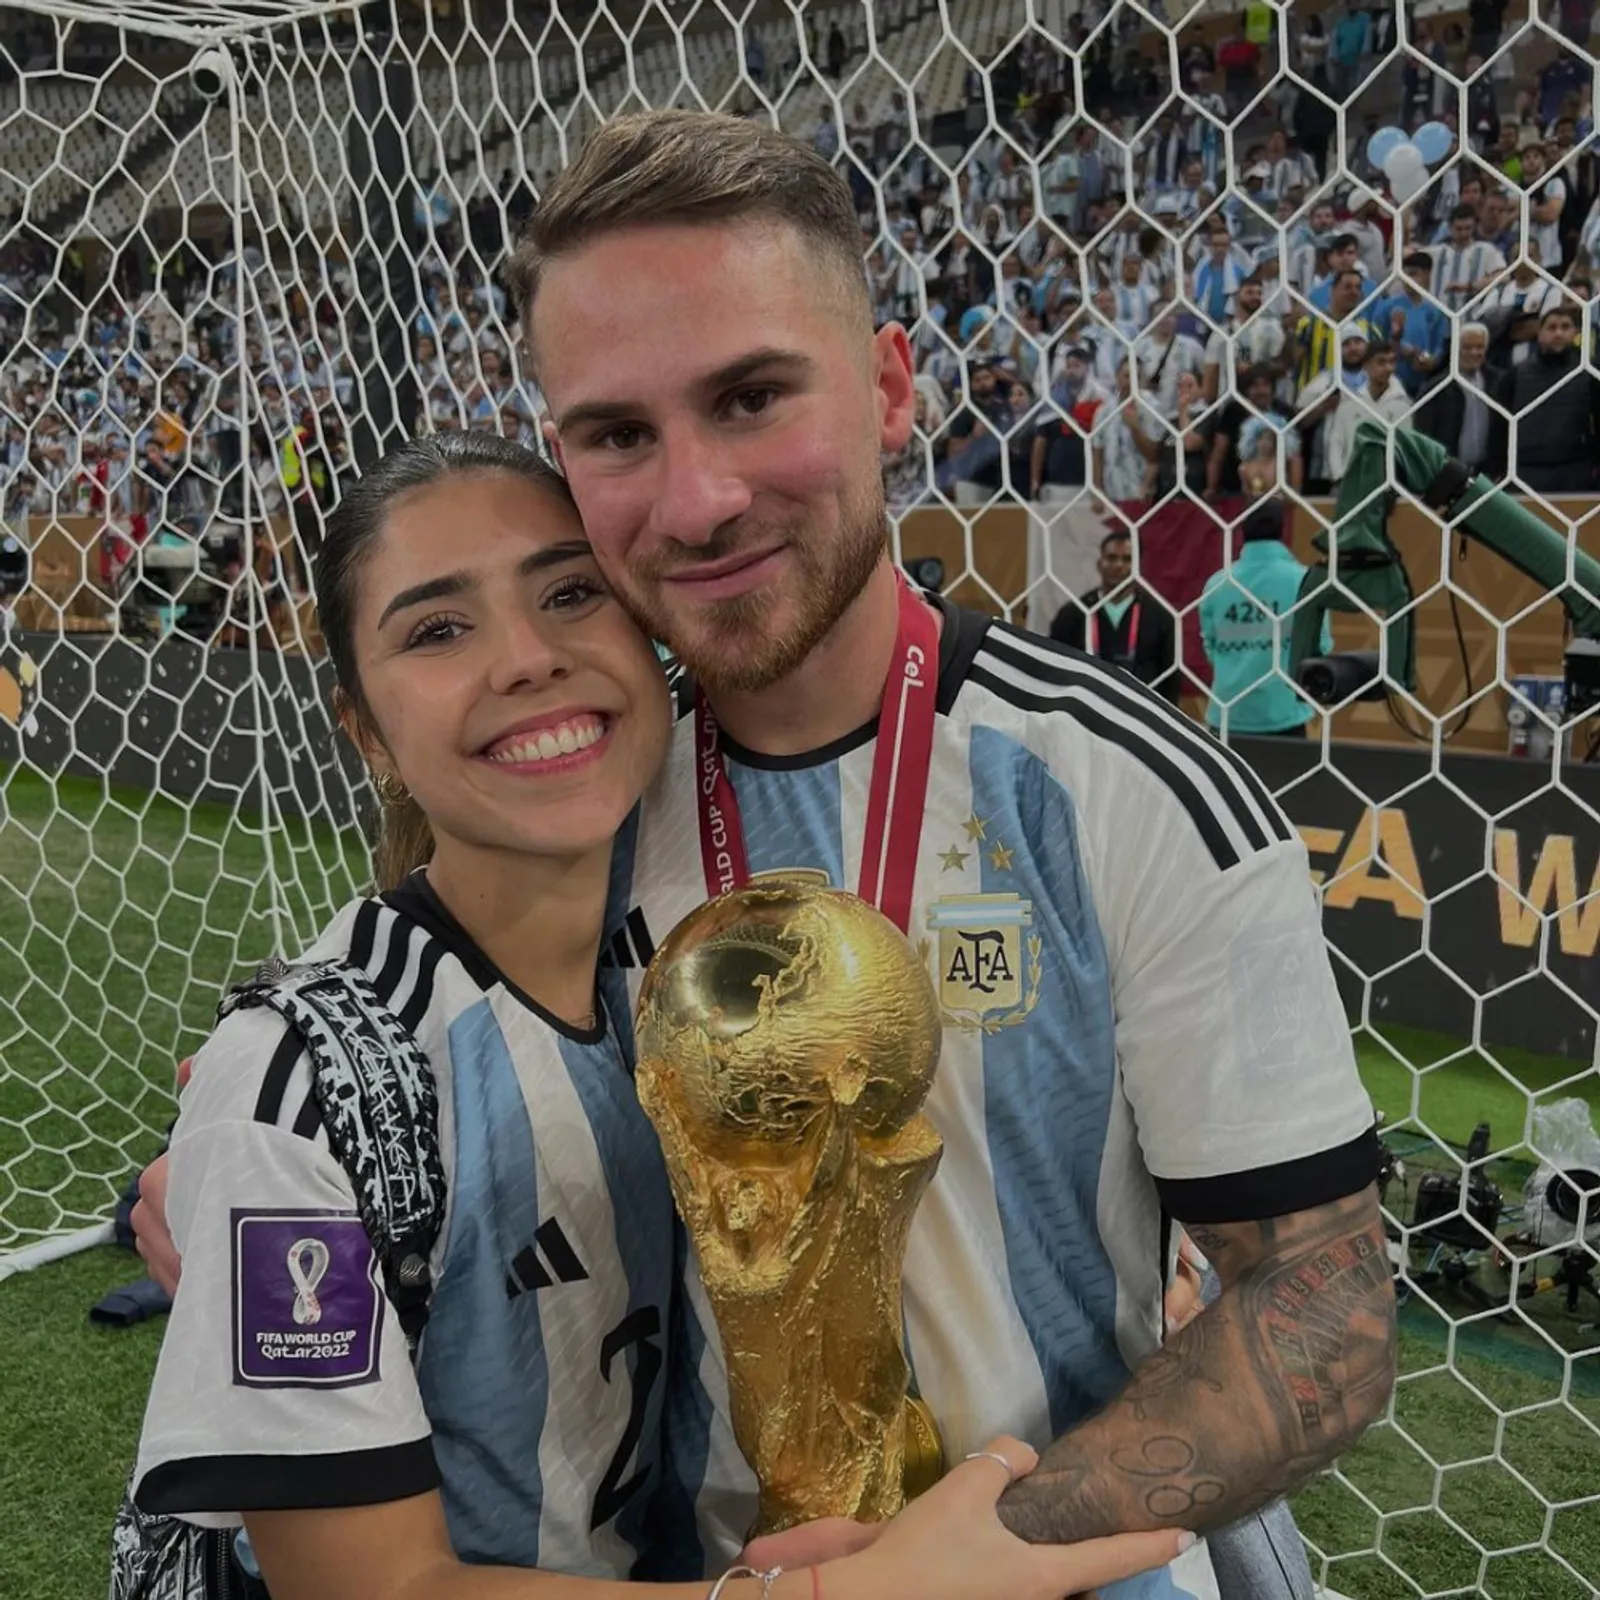 Juara Piala Dunia, 8 Potret Mesra Pemain Argentina Bersama Pasangan